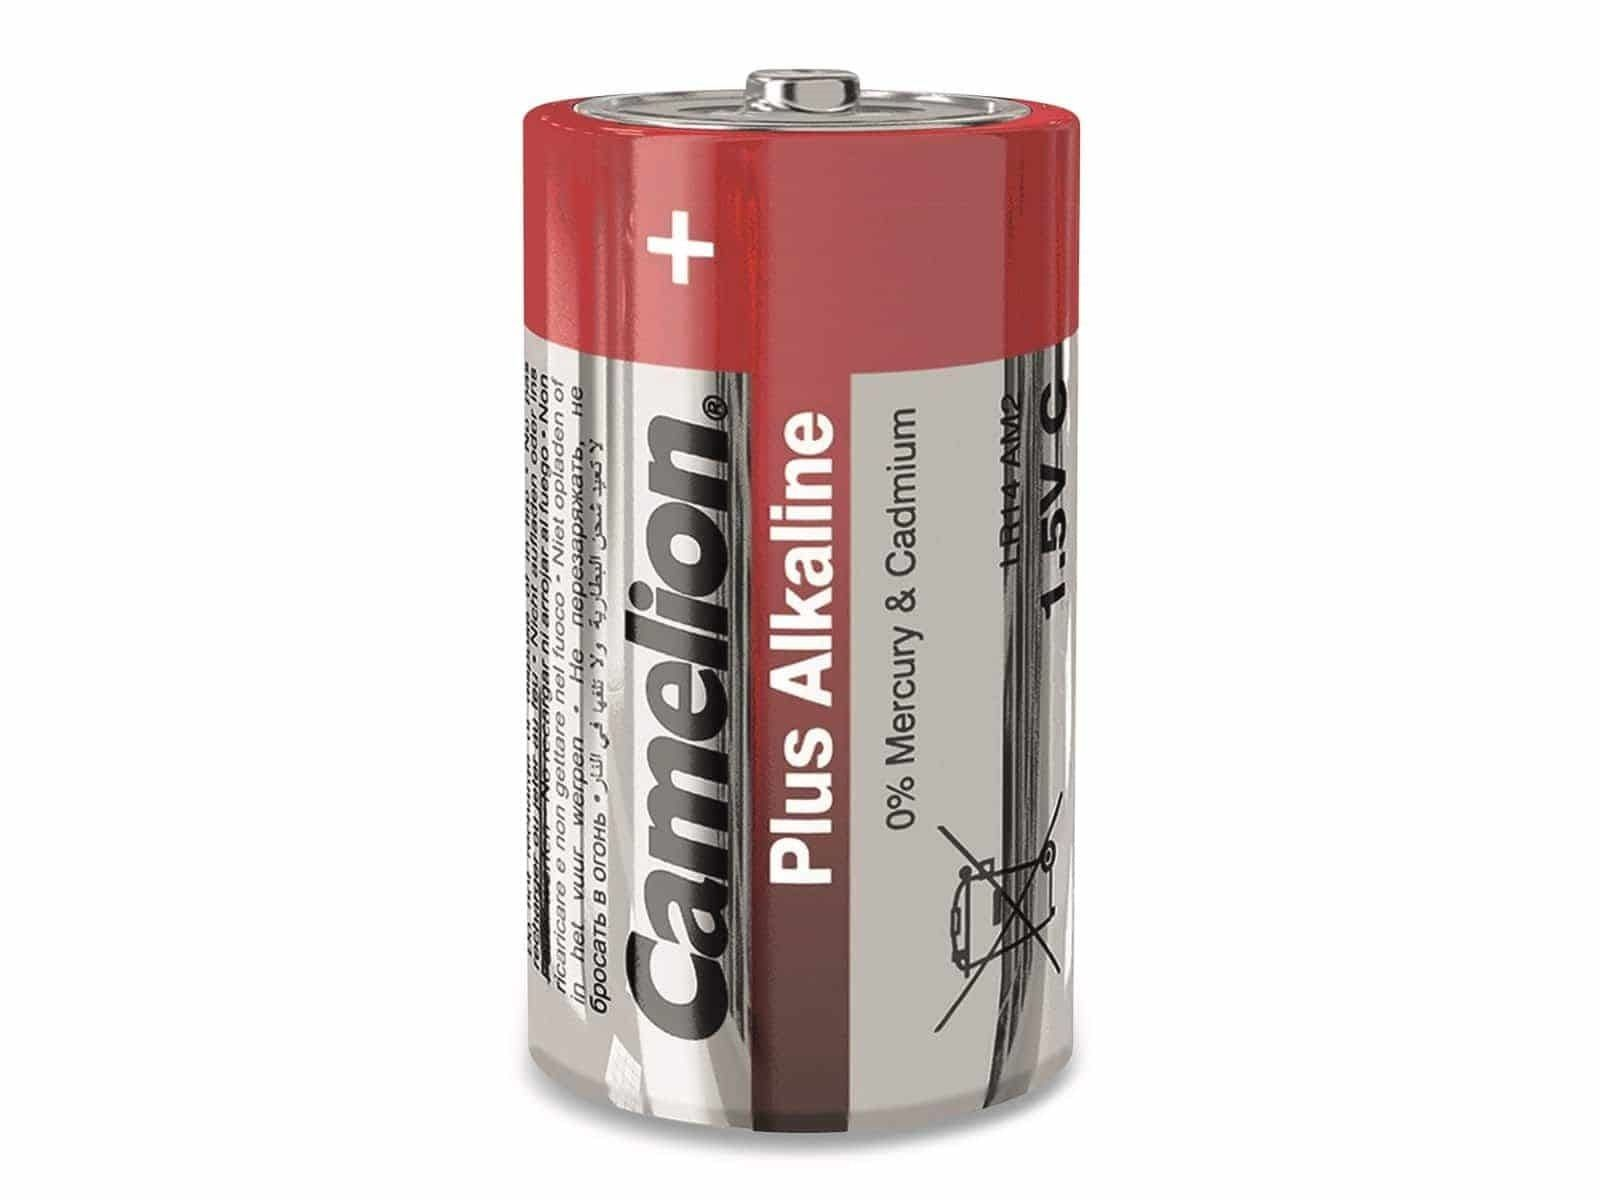 Stück Batterie CAMELION Plus-Alkaline, 2 LR14, Baby-Batterie, Alkaline